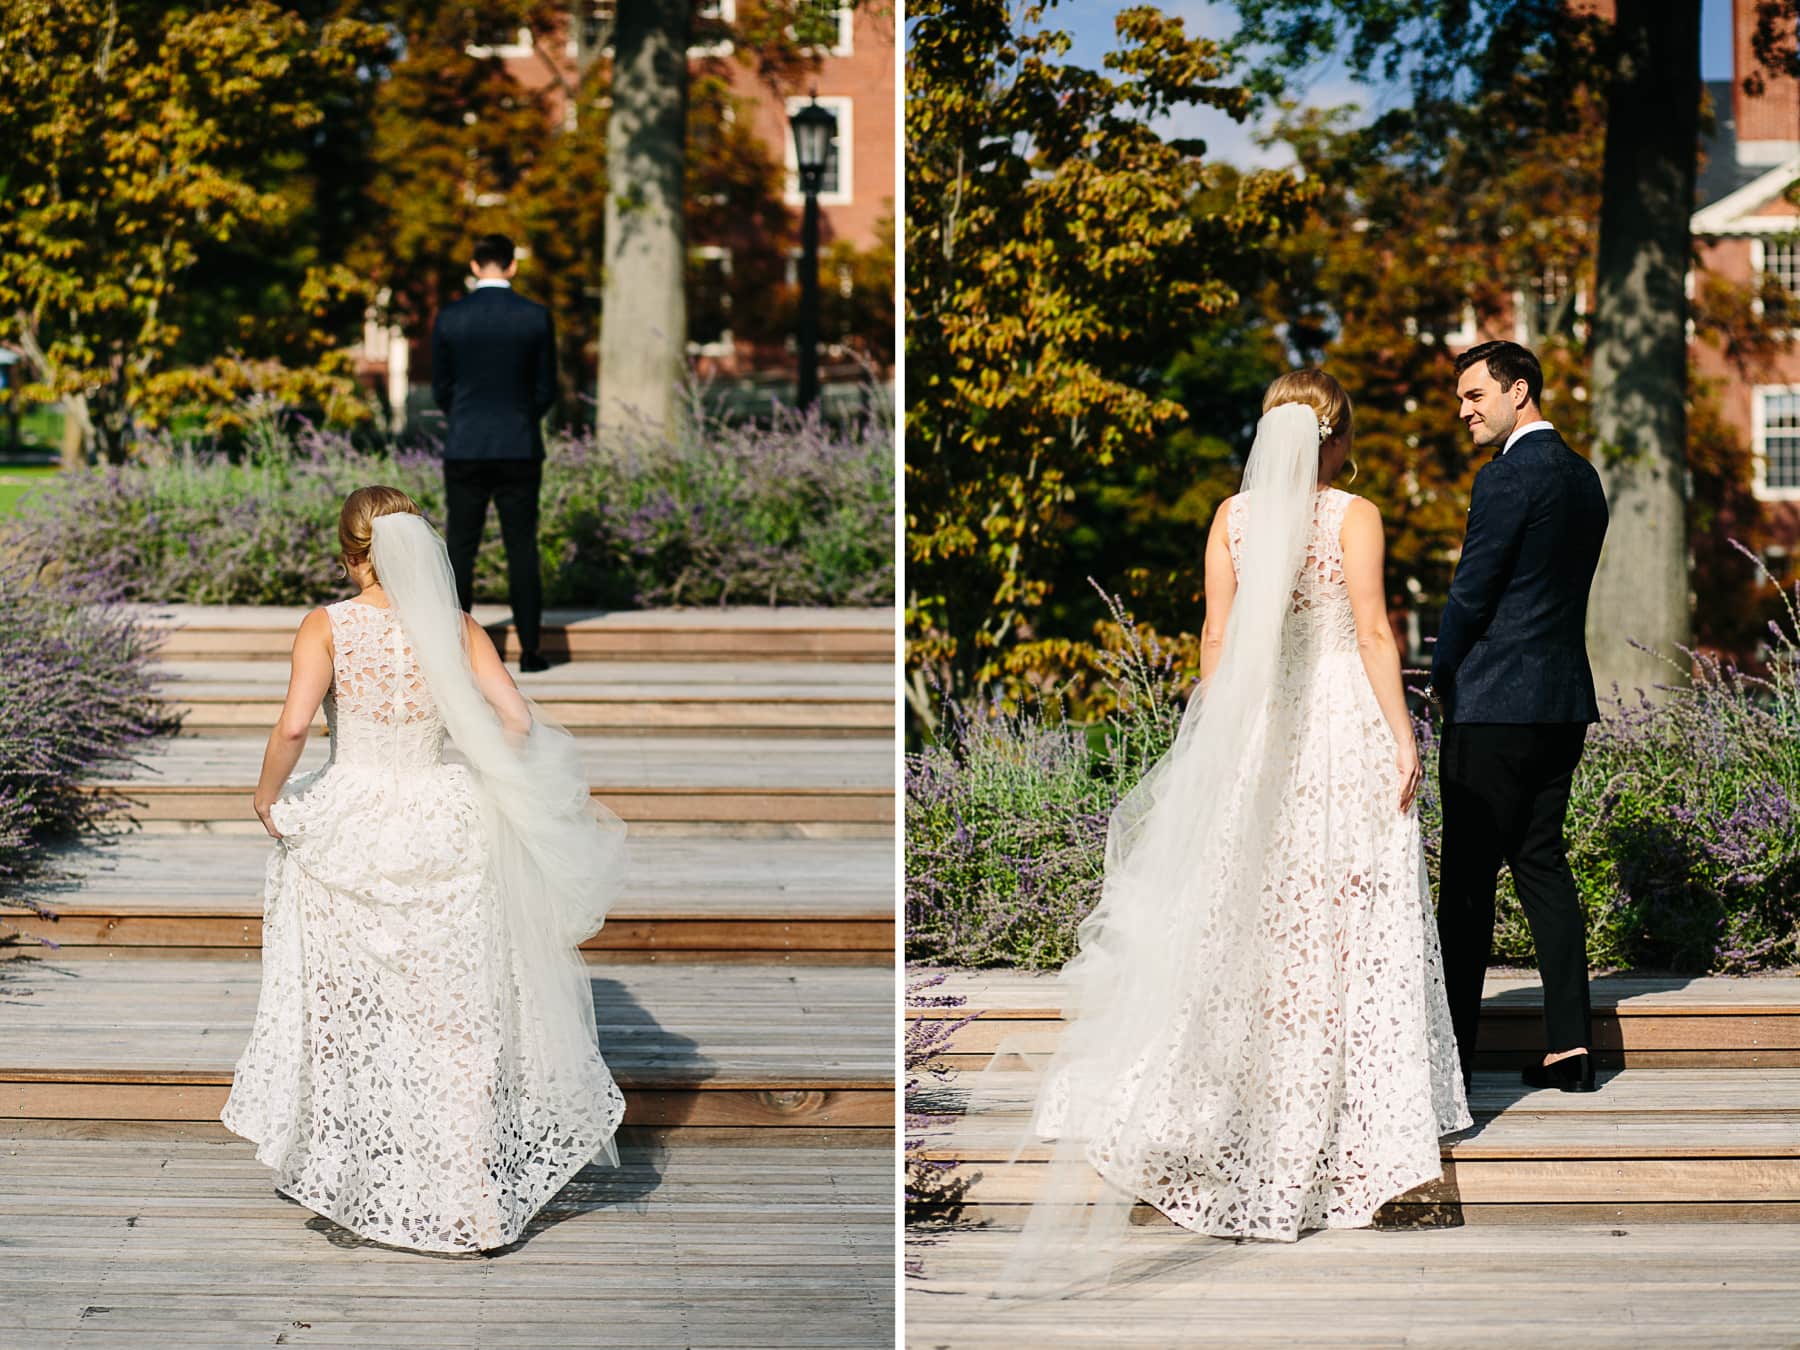 wedding portraits at Radcliffe on Harvard's campus | Kelly Benvenuto Photography